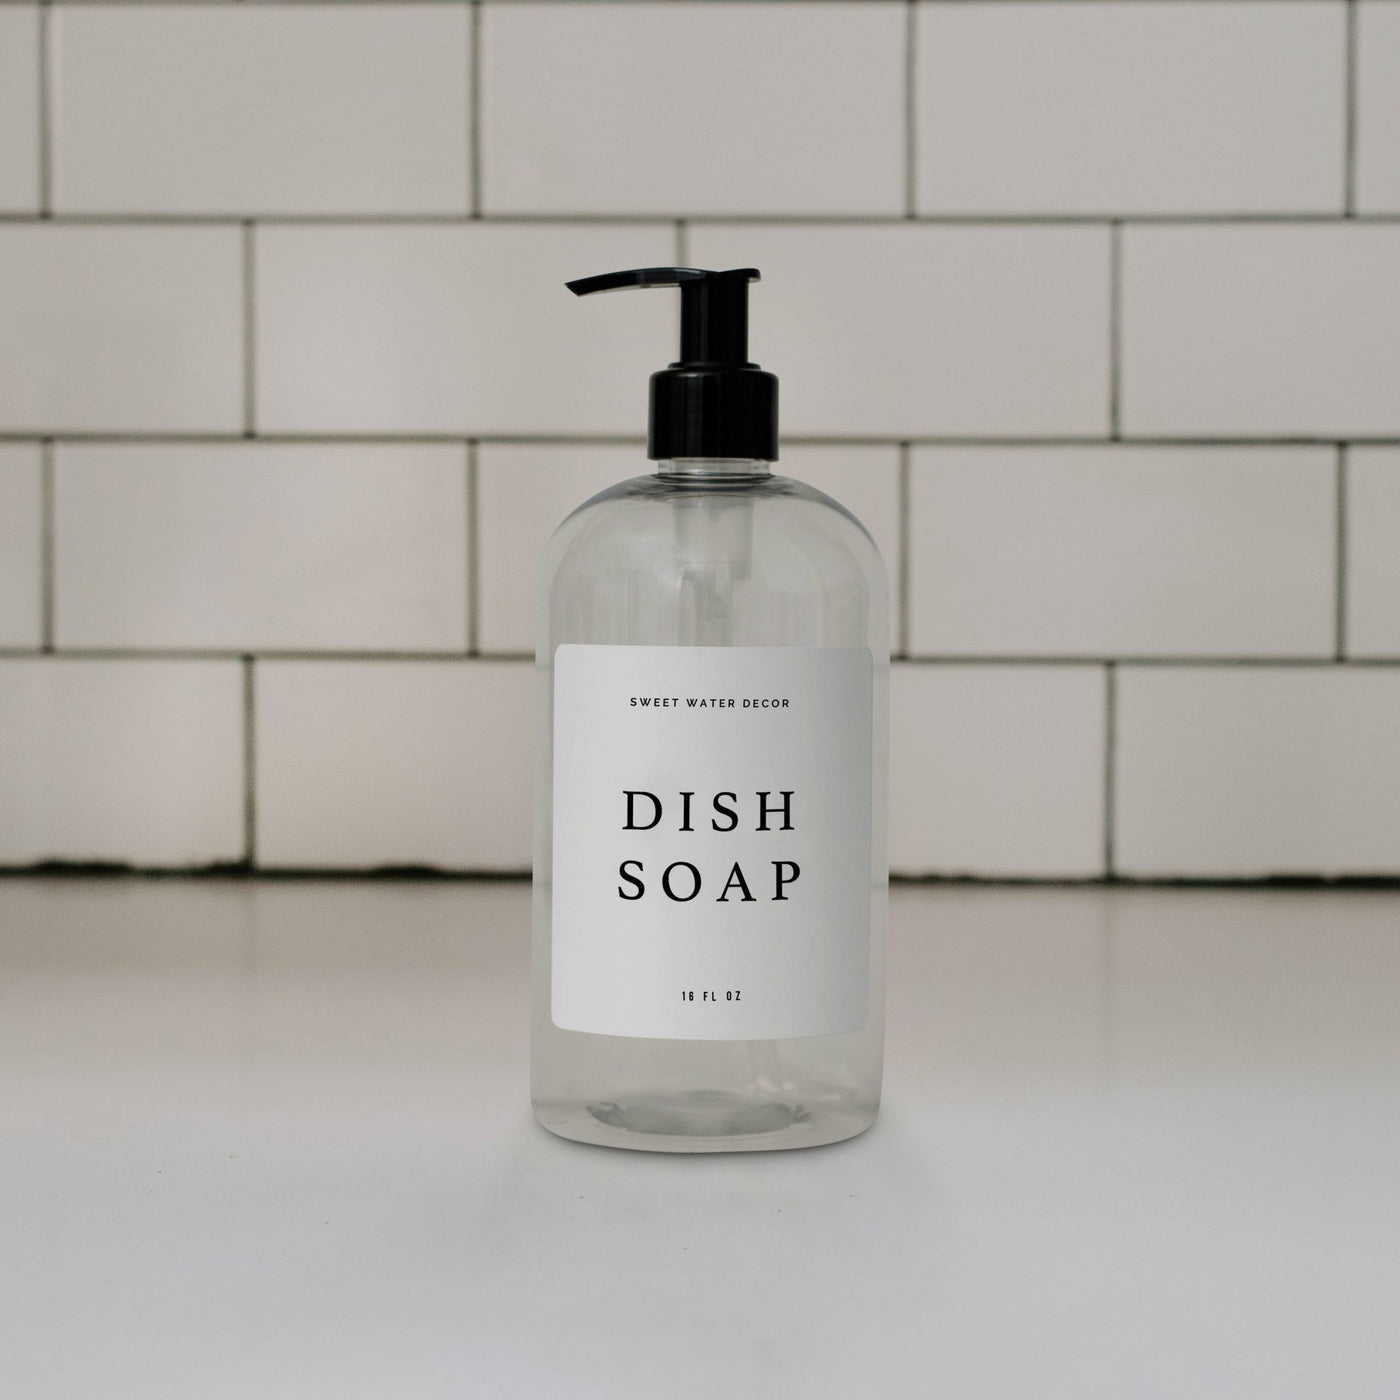 16oz Clear Plastic Dish Soap Dispenser - White Text Label - Sweet Water Decor - Dispensers